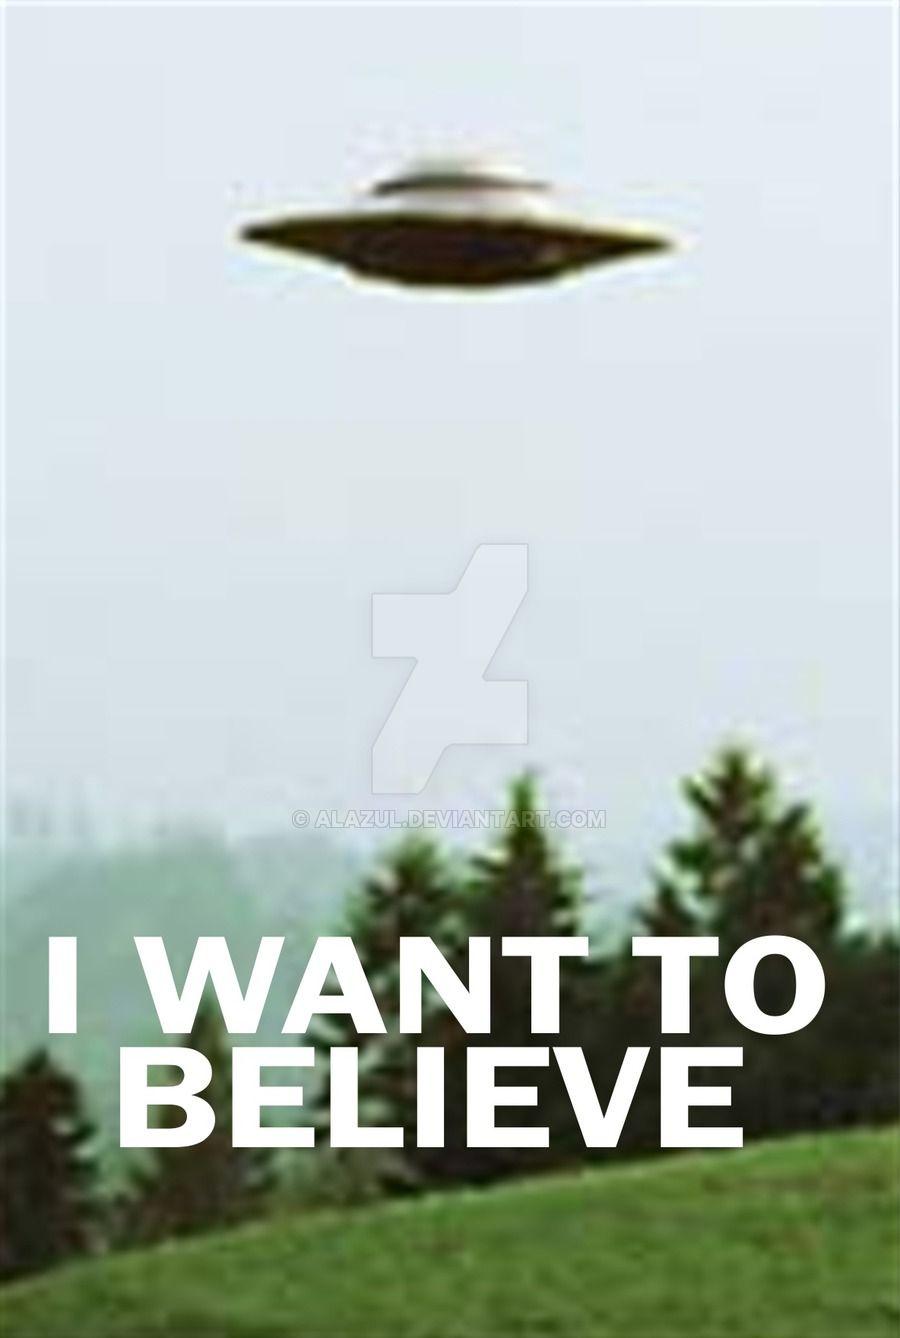 I want to believe плакат. I want to believe обои. Плакат секретные материалы i want to believe. Обои на айфон i want to believe. Started to believe